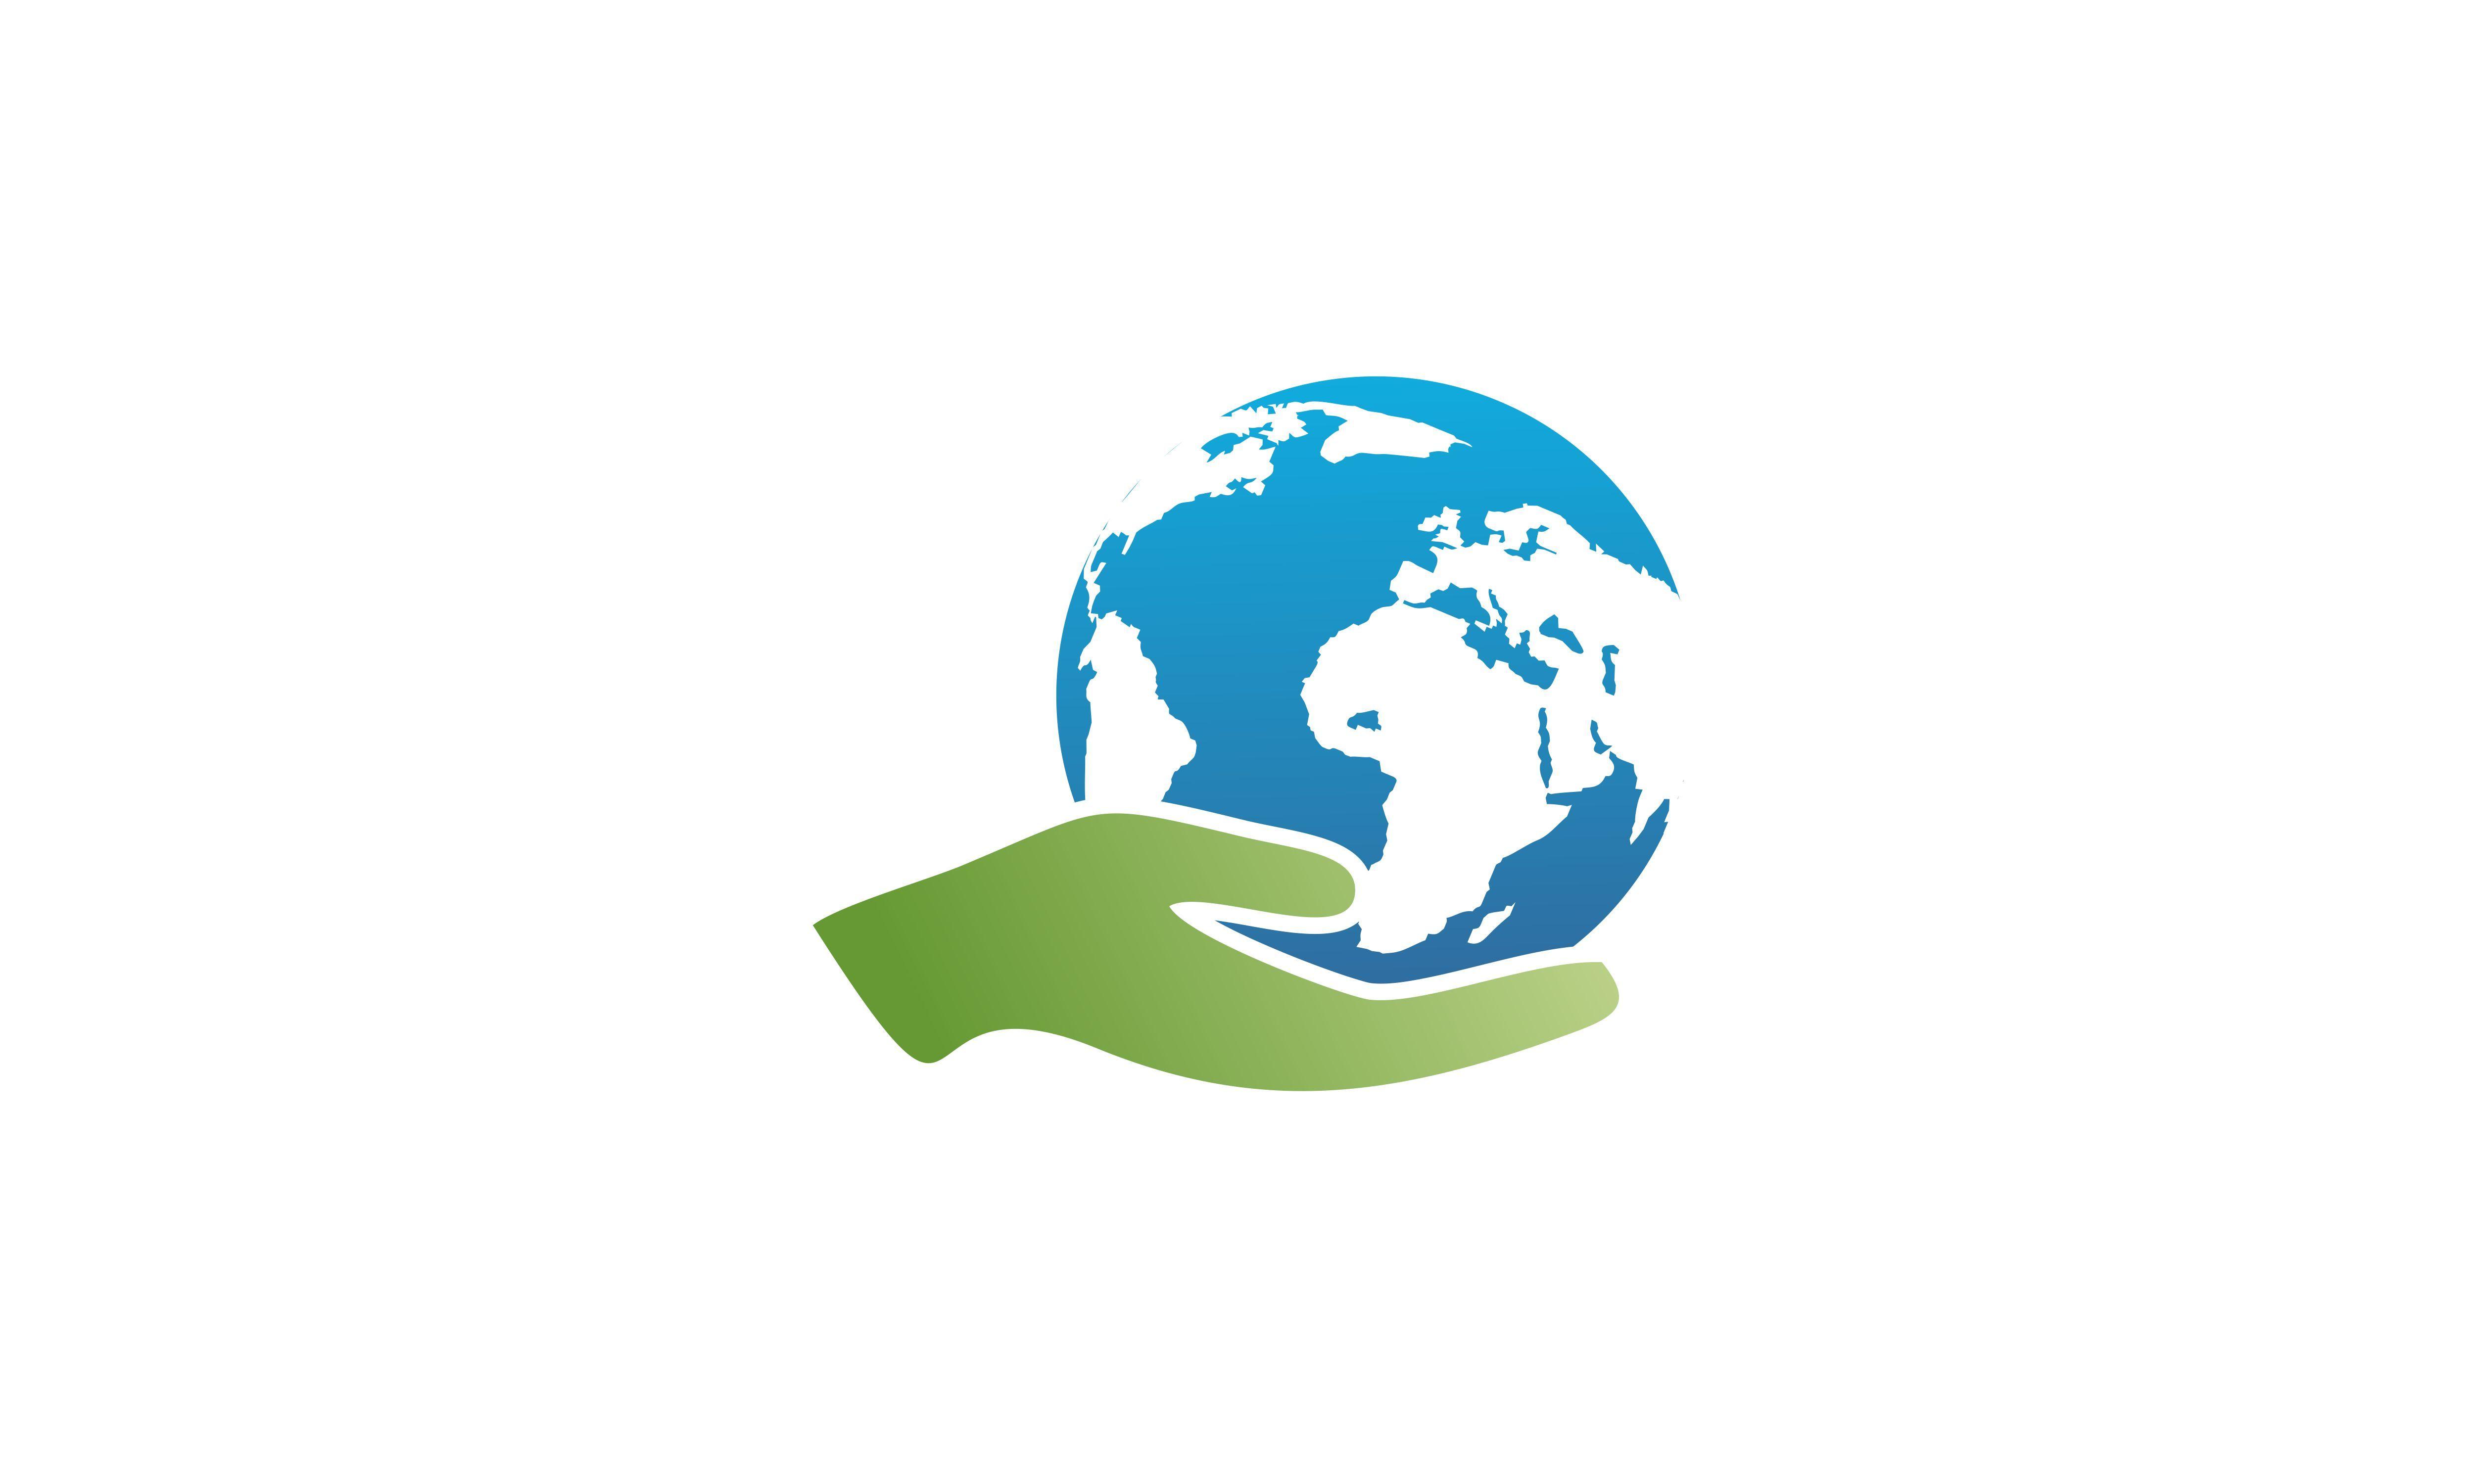 Earth Globe Logo - Hand Care, World, Globe Logo Graphic by Mansel Brist - Creative Fabrica